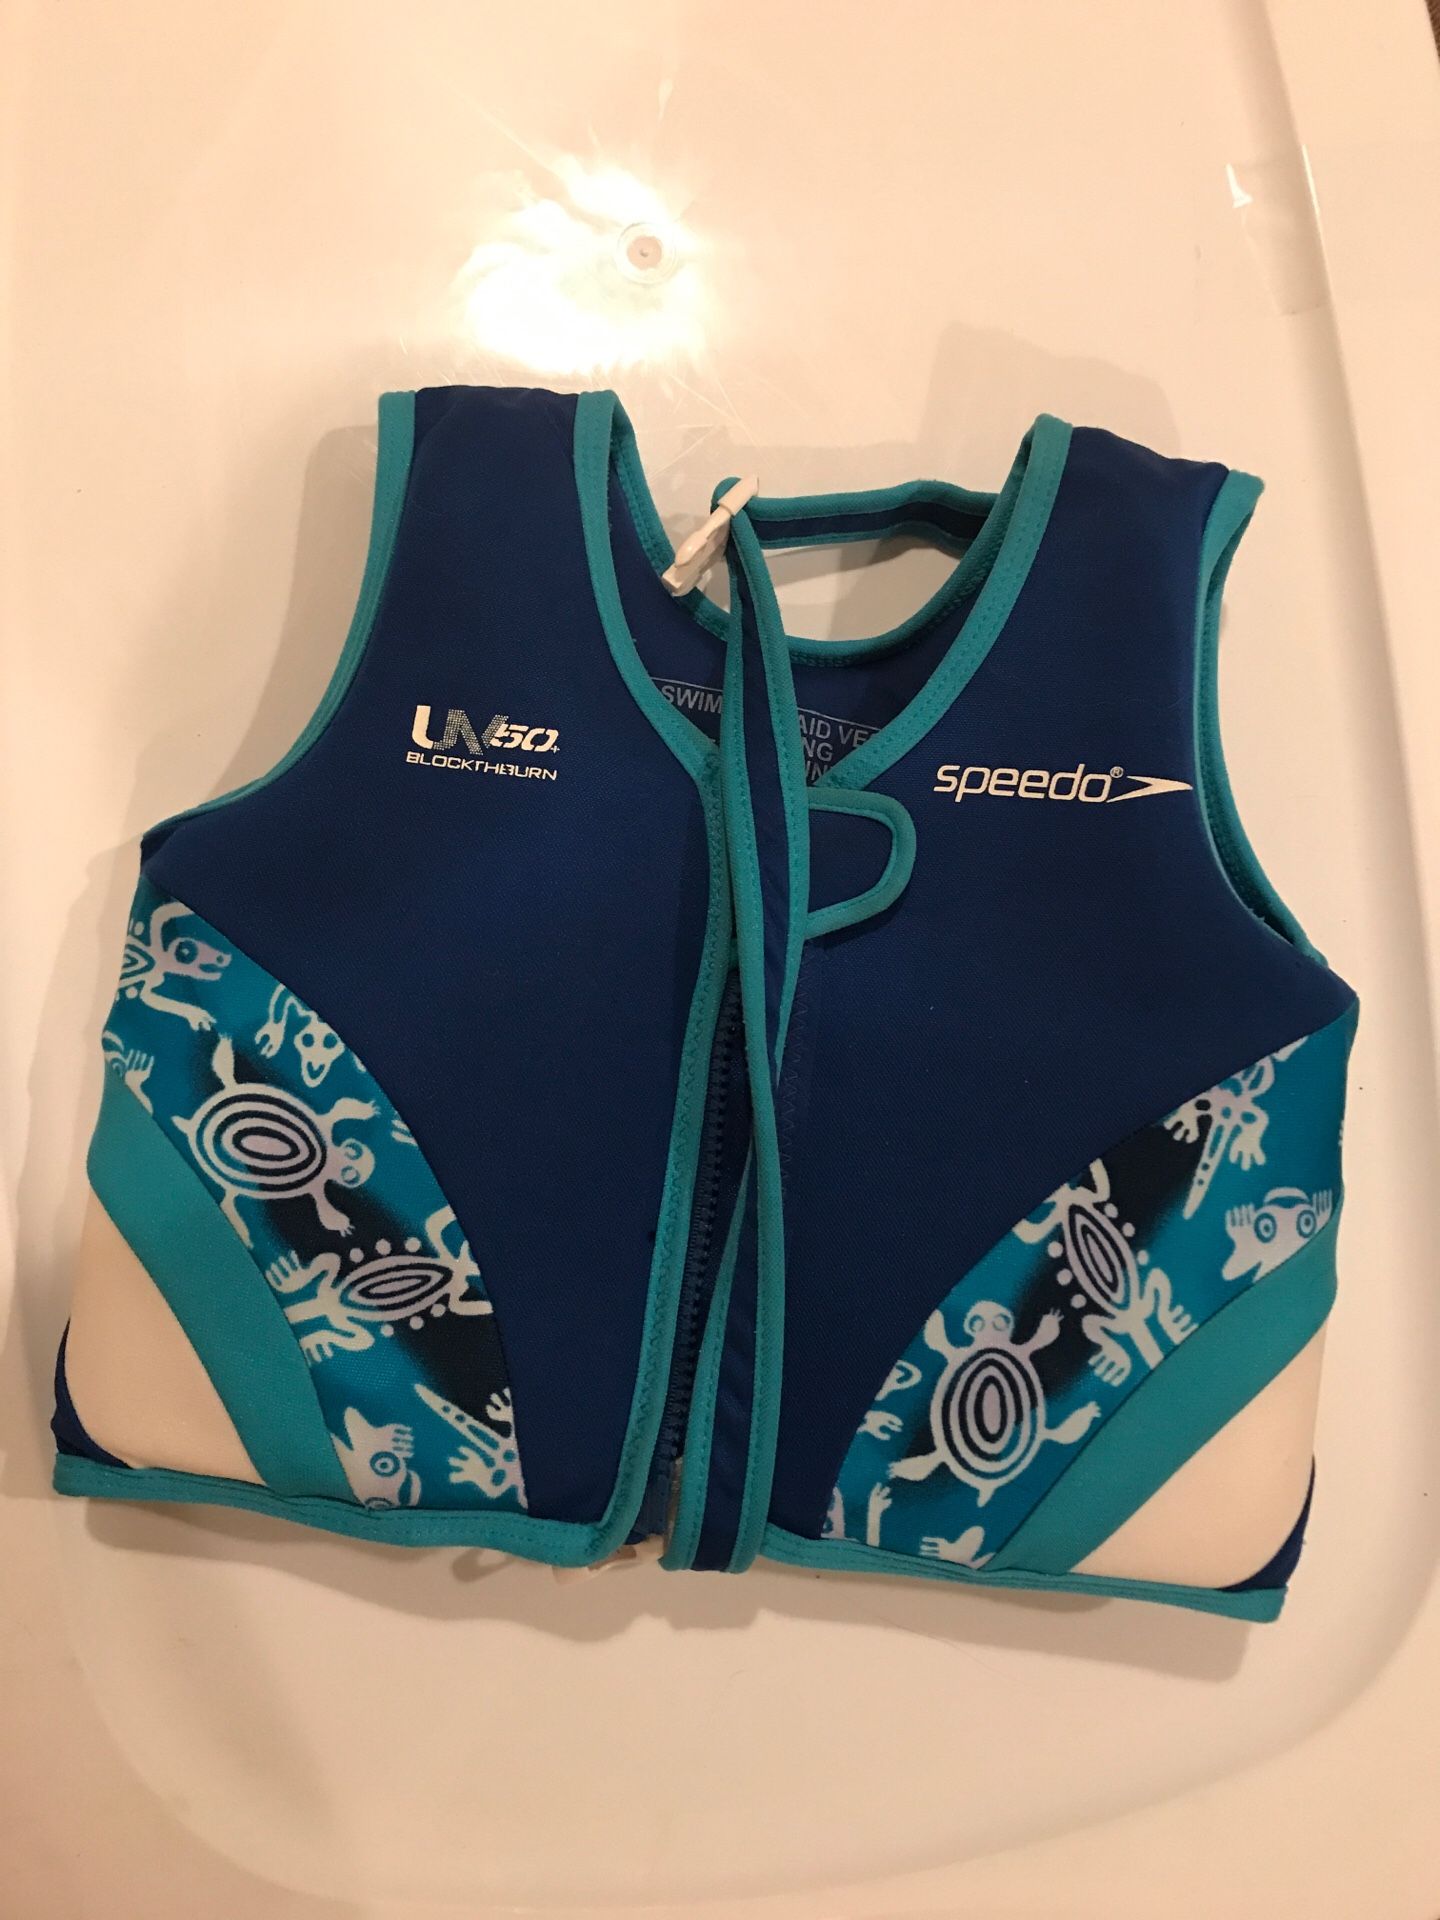 Speedo Life Vest for Swimming!